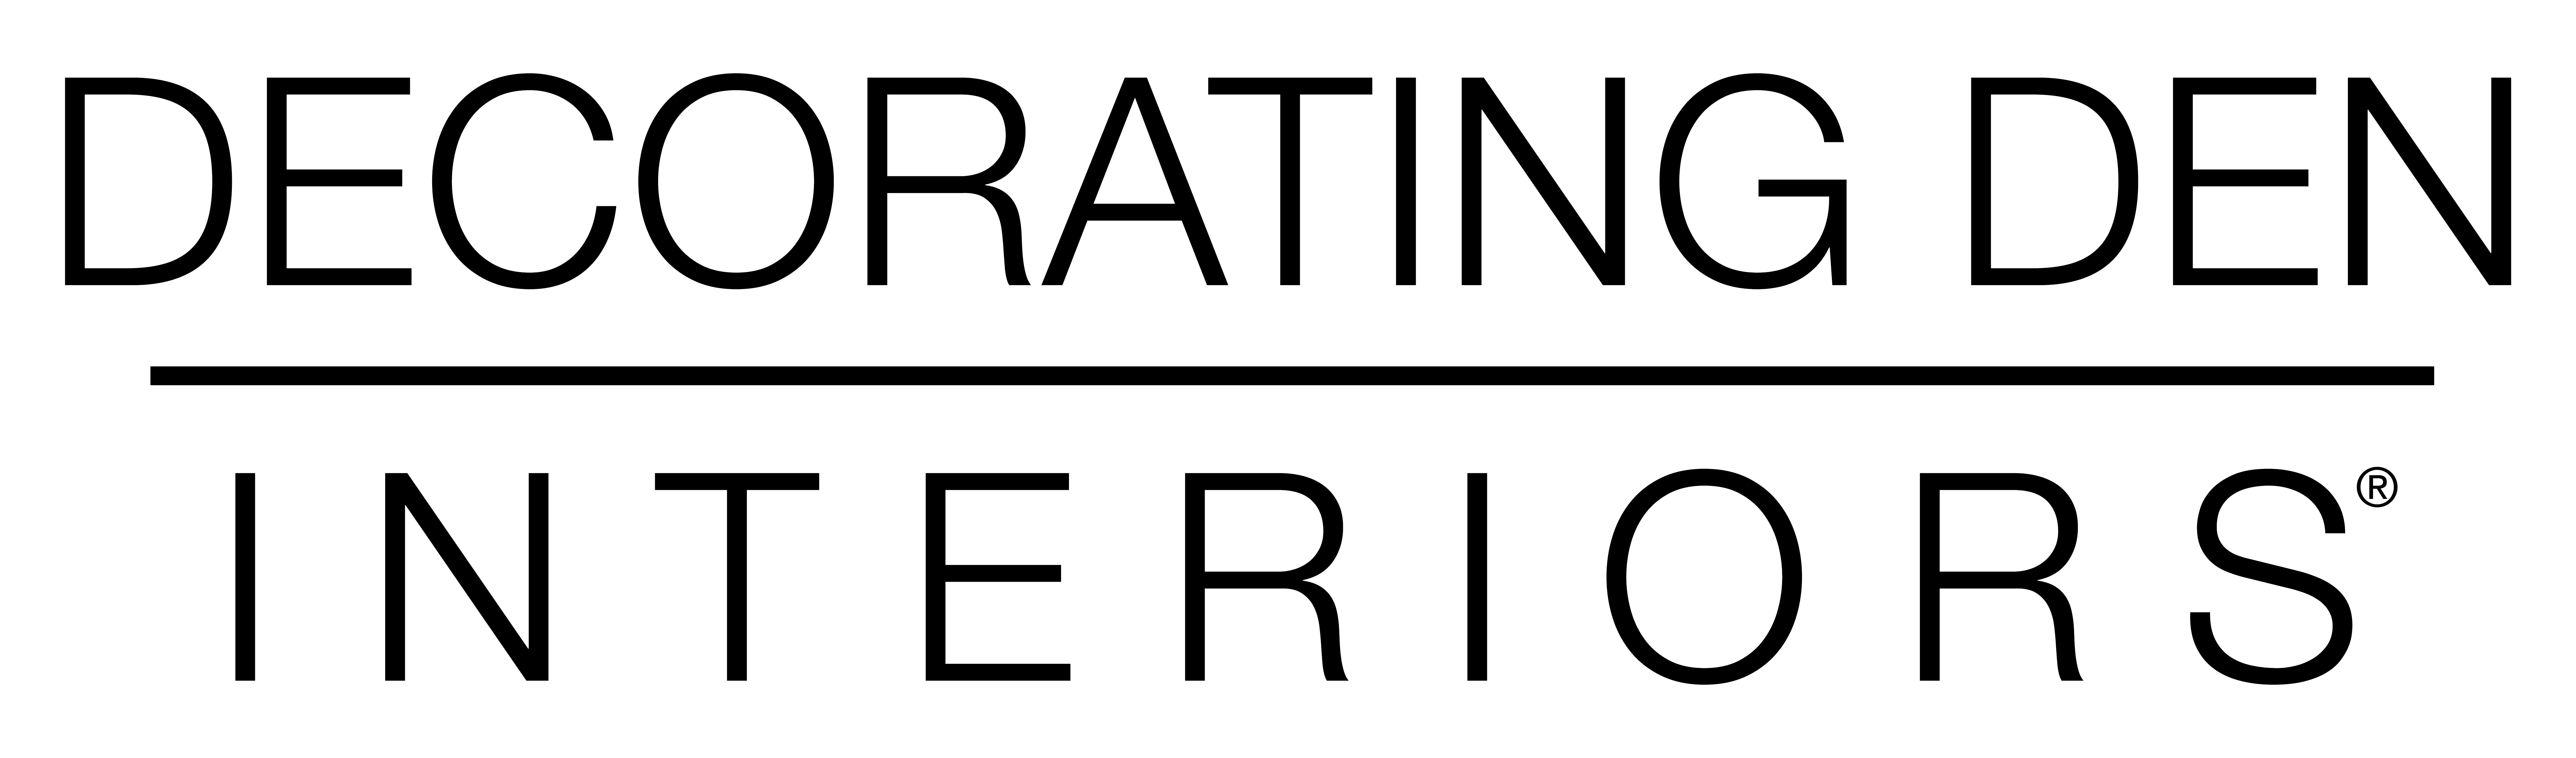 Decorating Den Interiors Logo